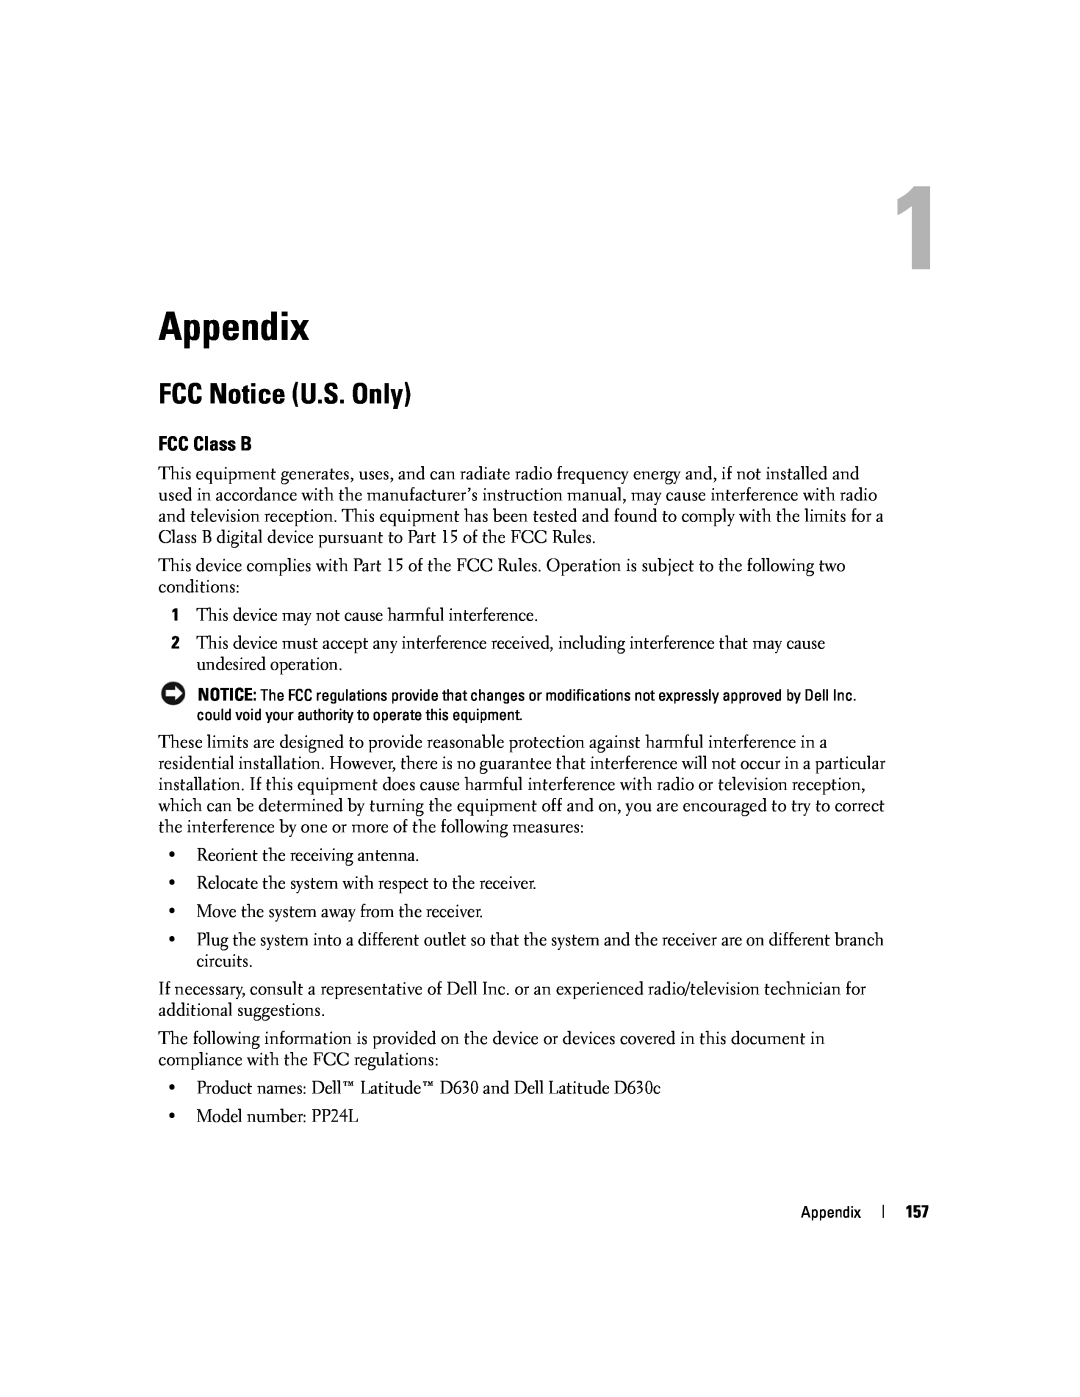 Dell PP24L manual Appendix, FCC Notice U.S. Only, FCC Class B 